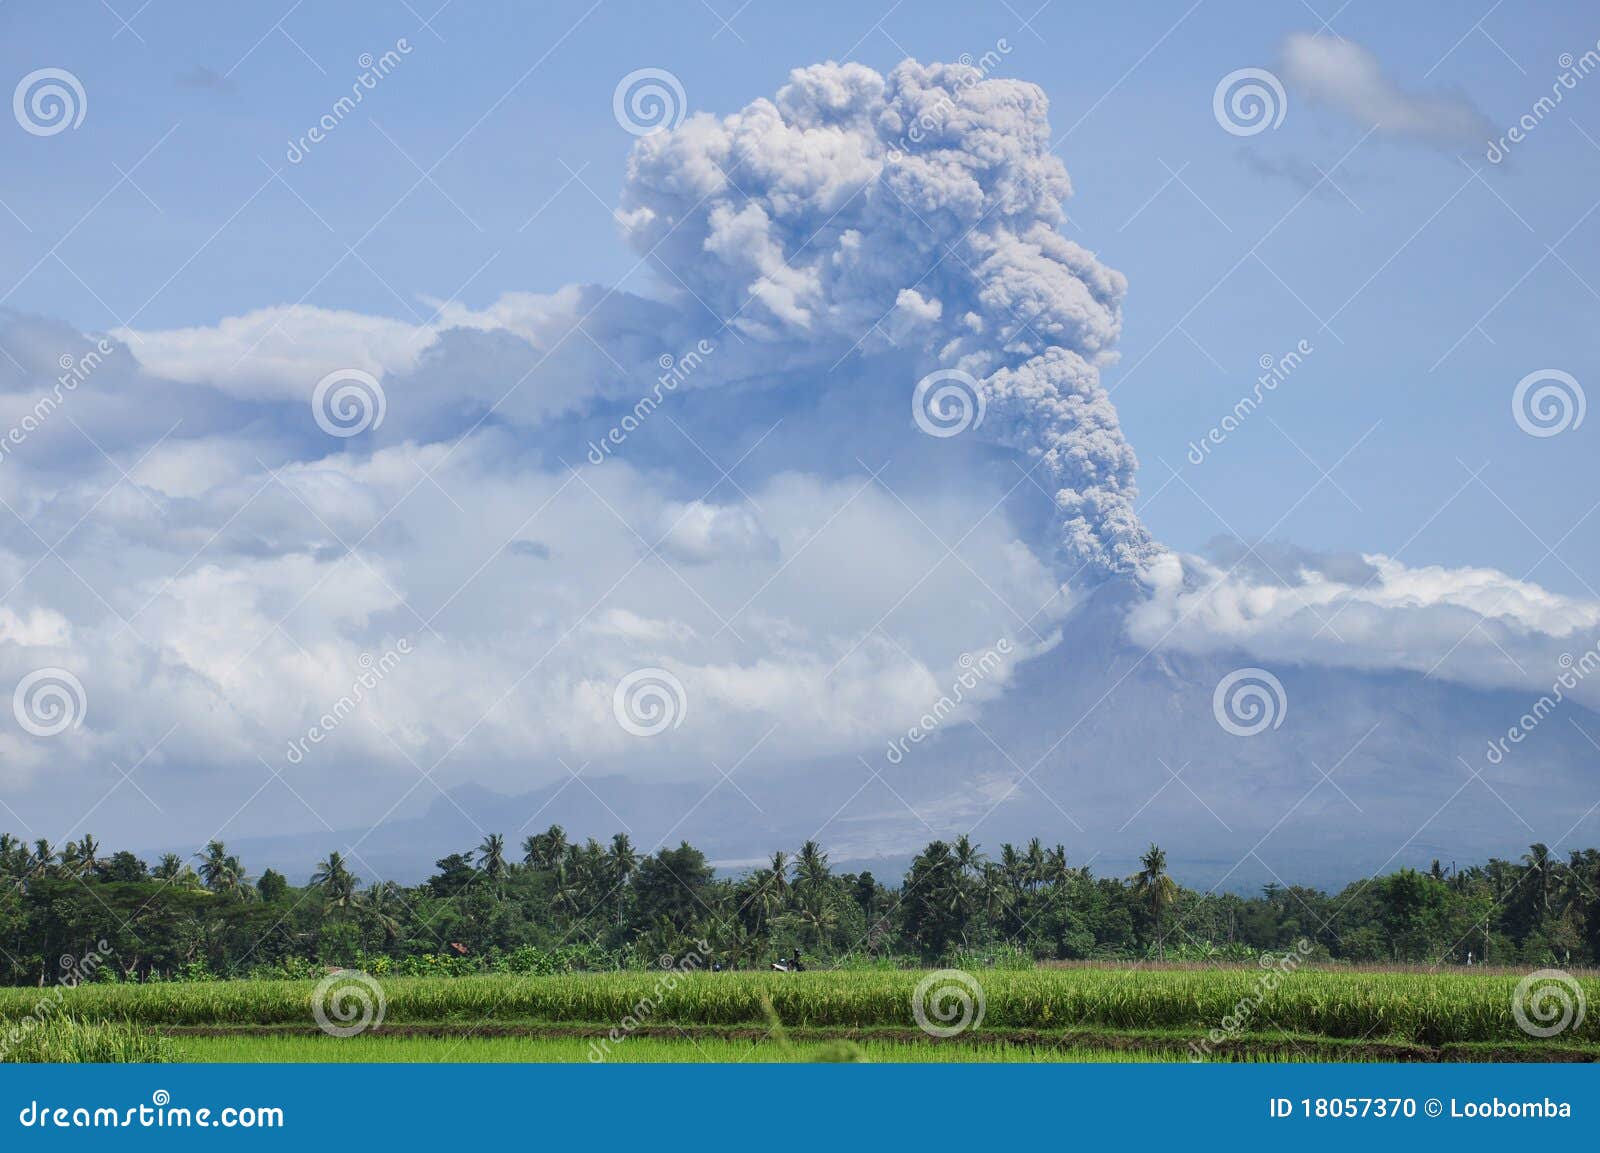 mount merapi eruption